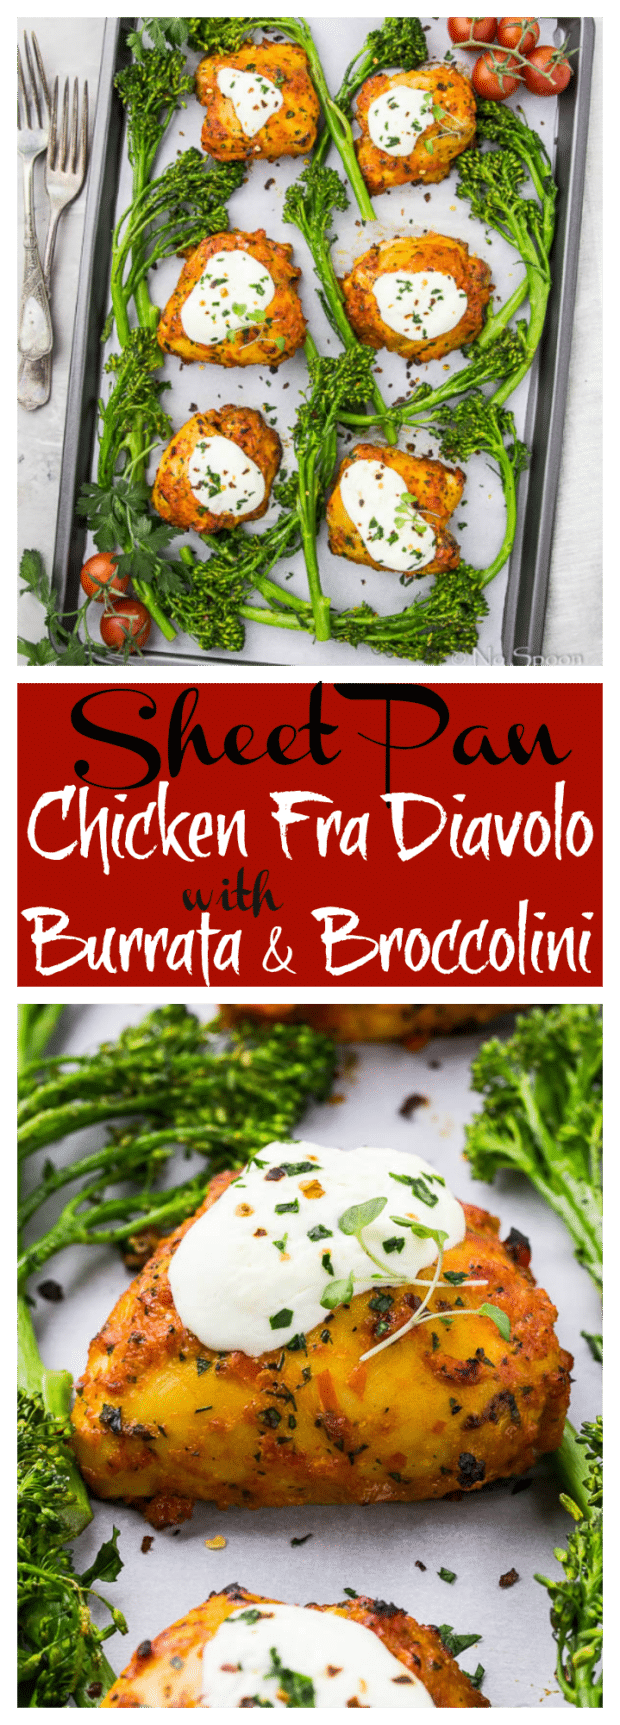 Sheet Pan Chicken Fra Diavolo with Burrata & Broccolini